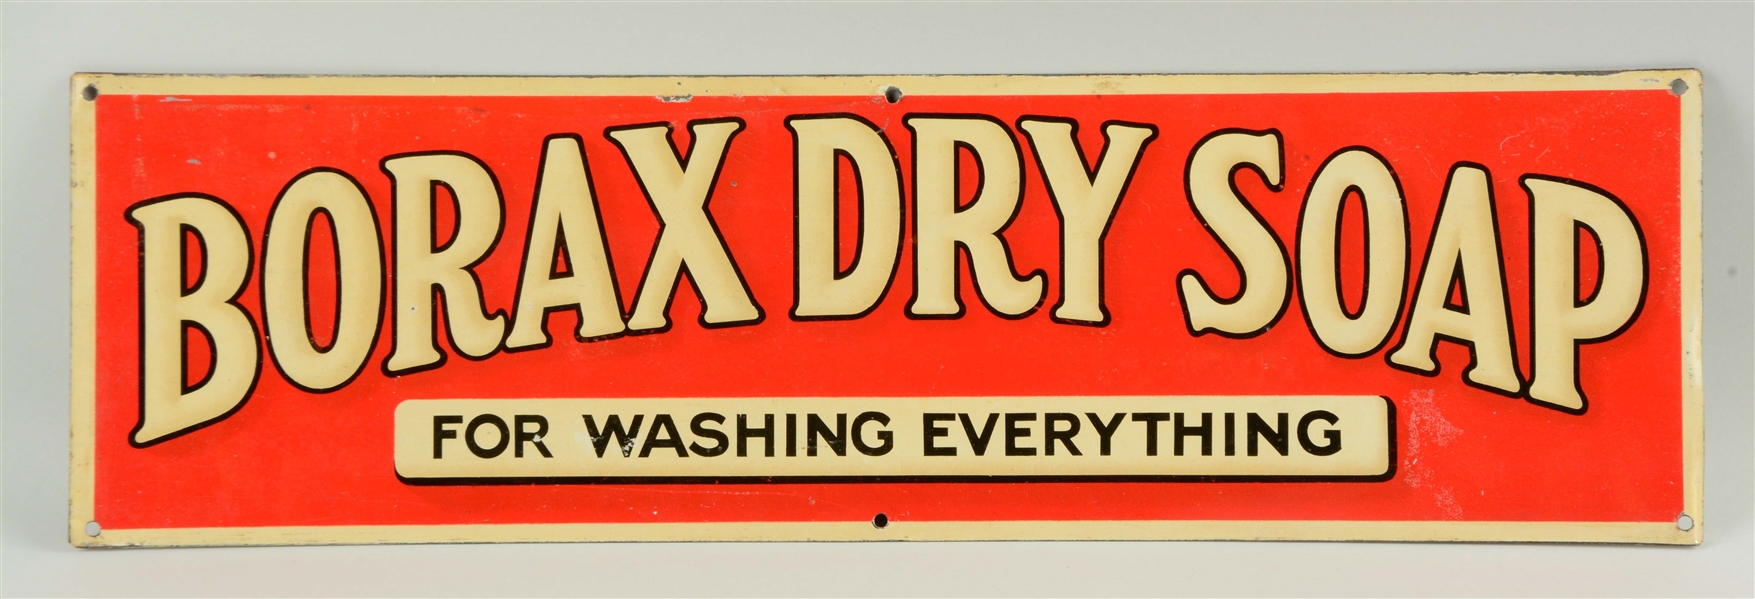 ADVERTISING TIN "BORAX DRY SOAP" SIGN.